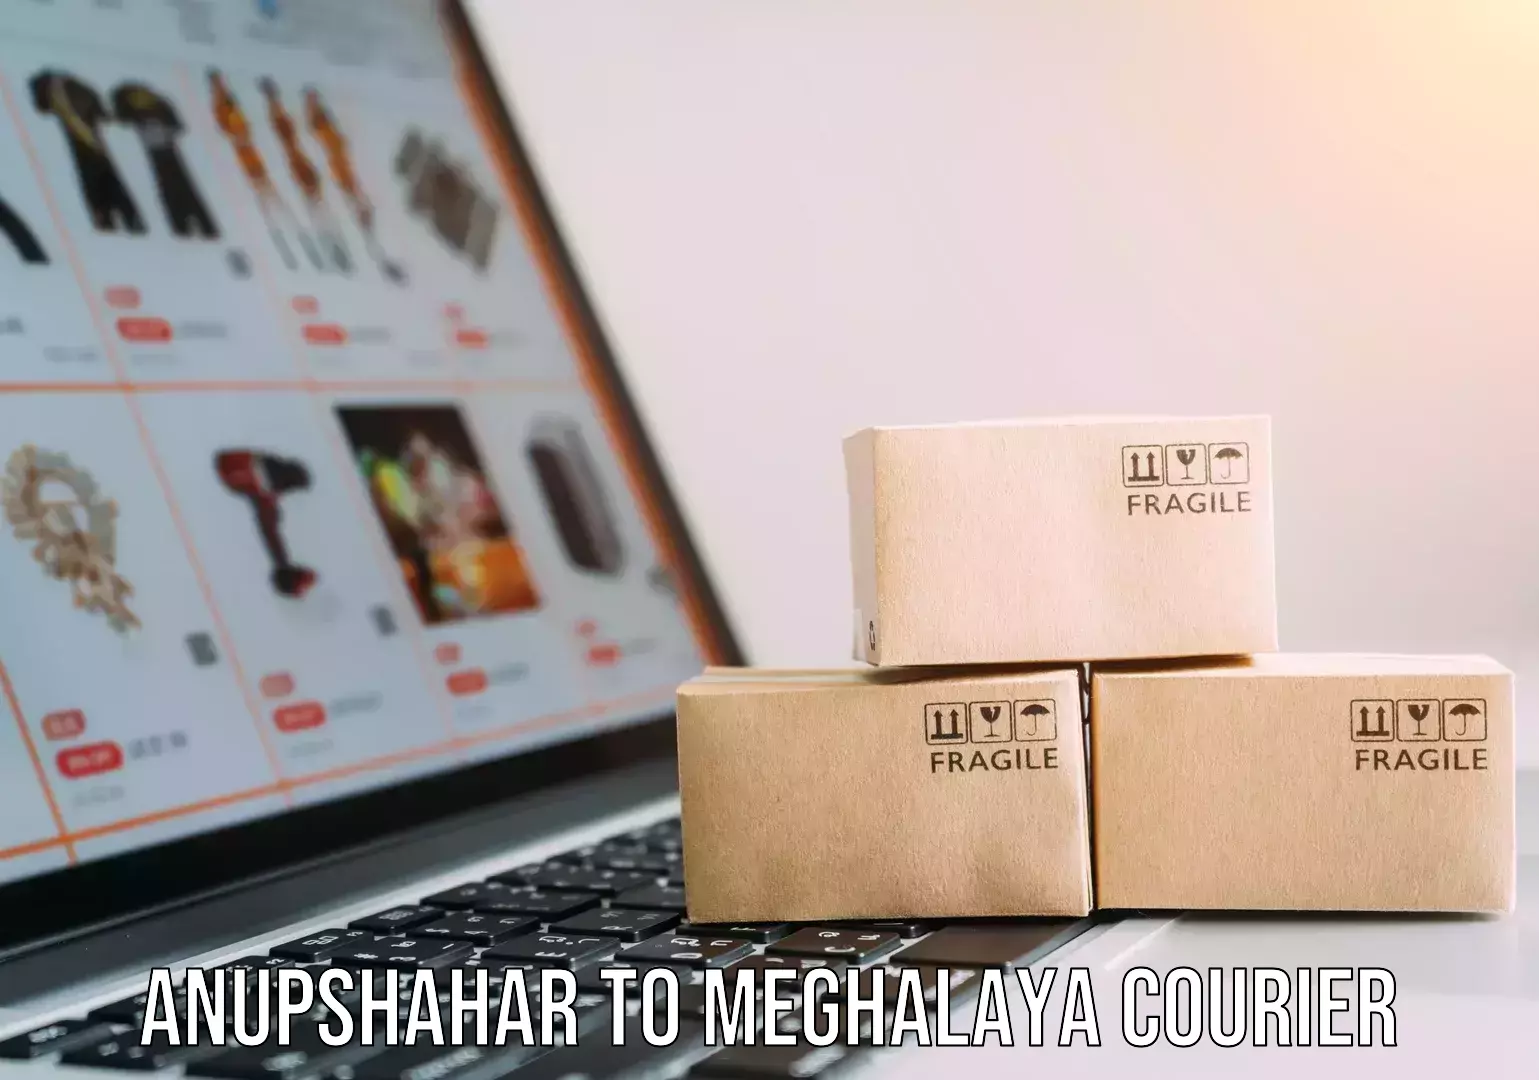 Courier service comparison Anupshahar to Meghalaya